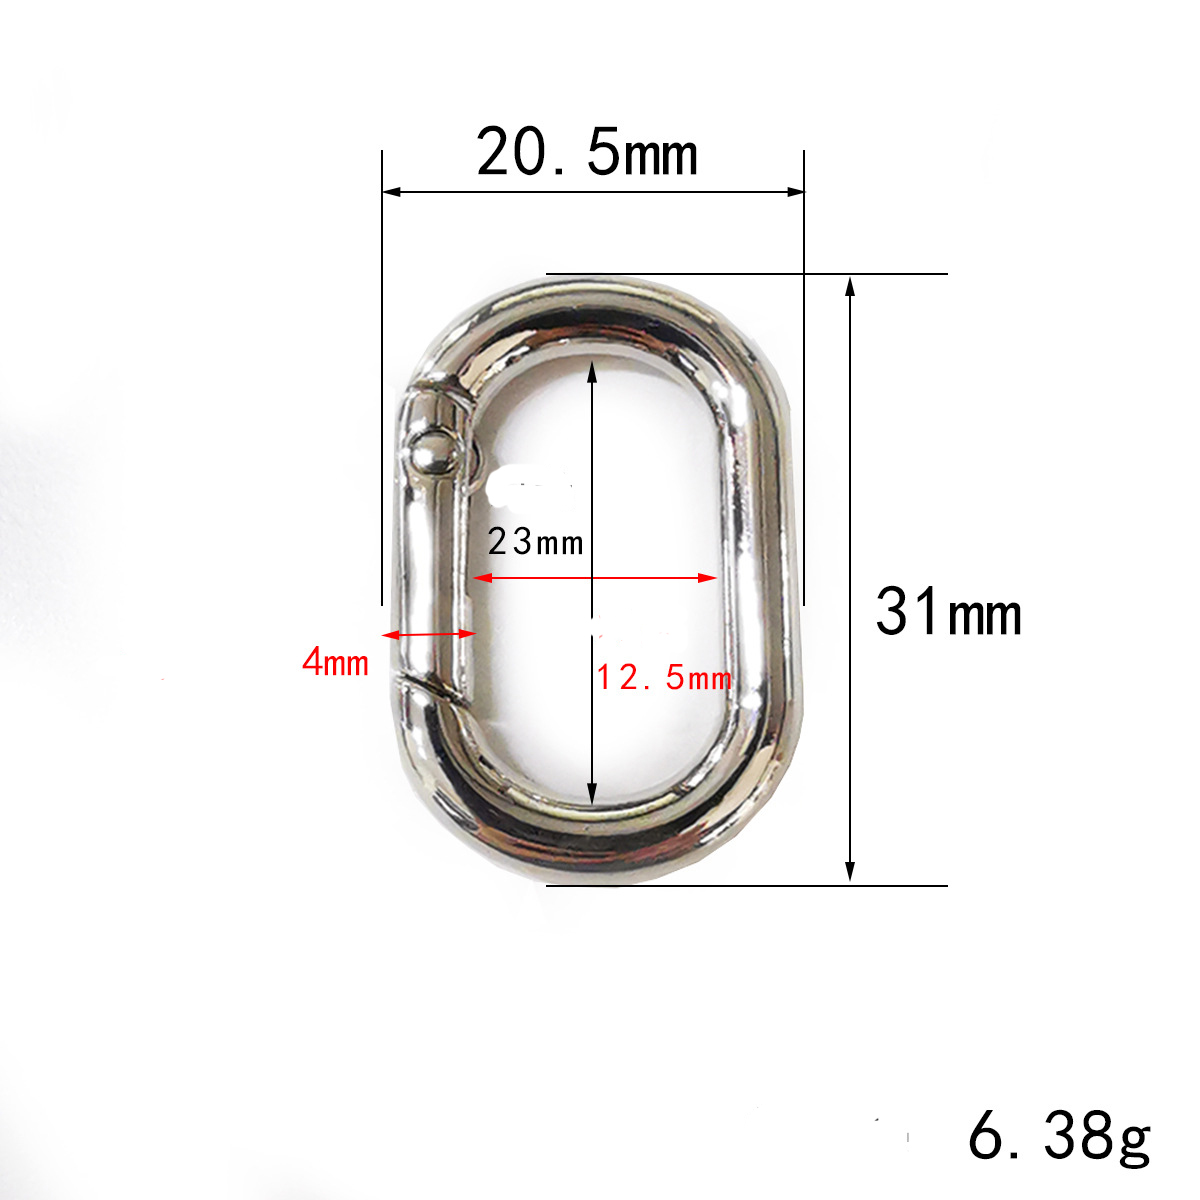 23mm inside diameter oval spring buckle